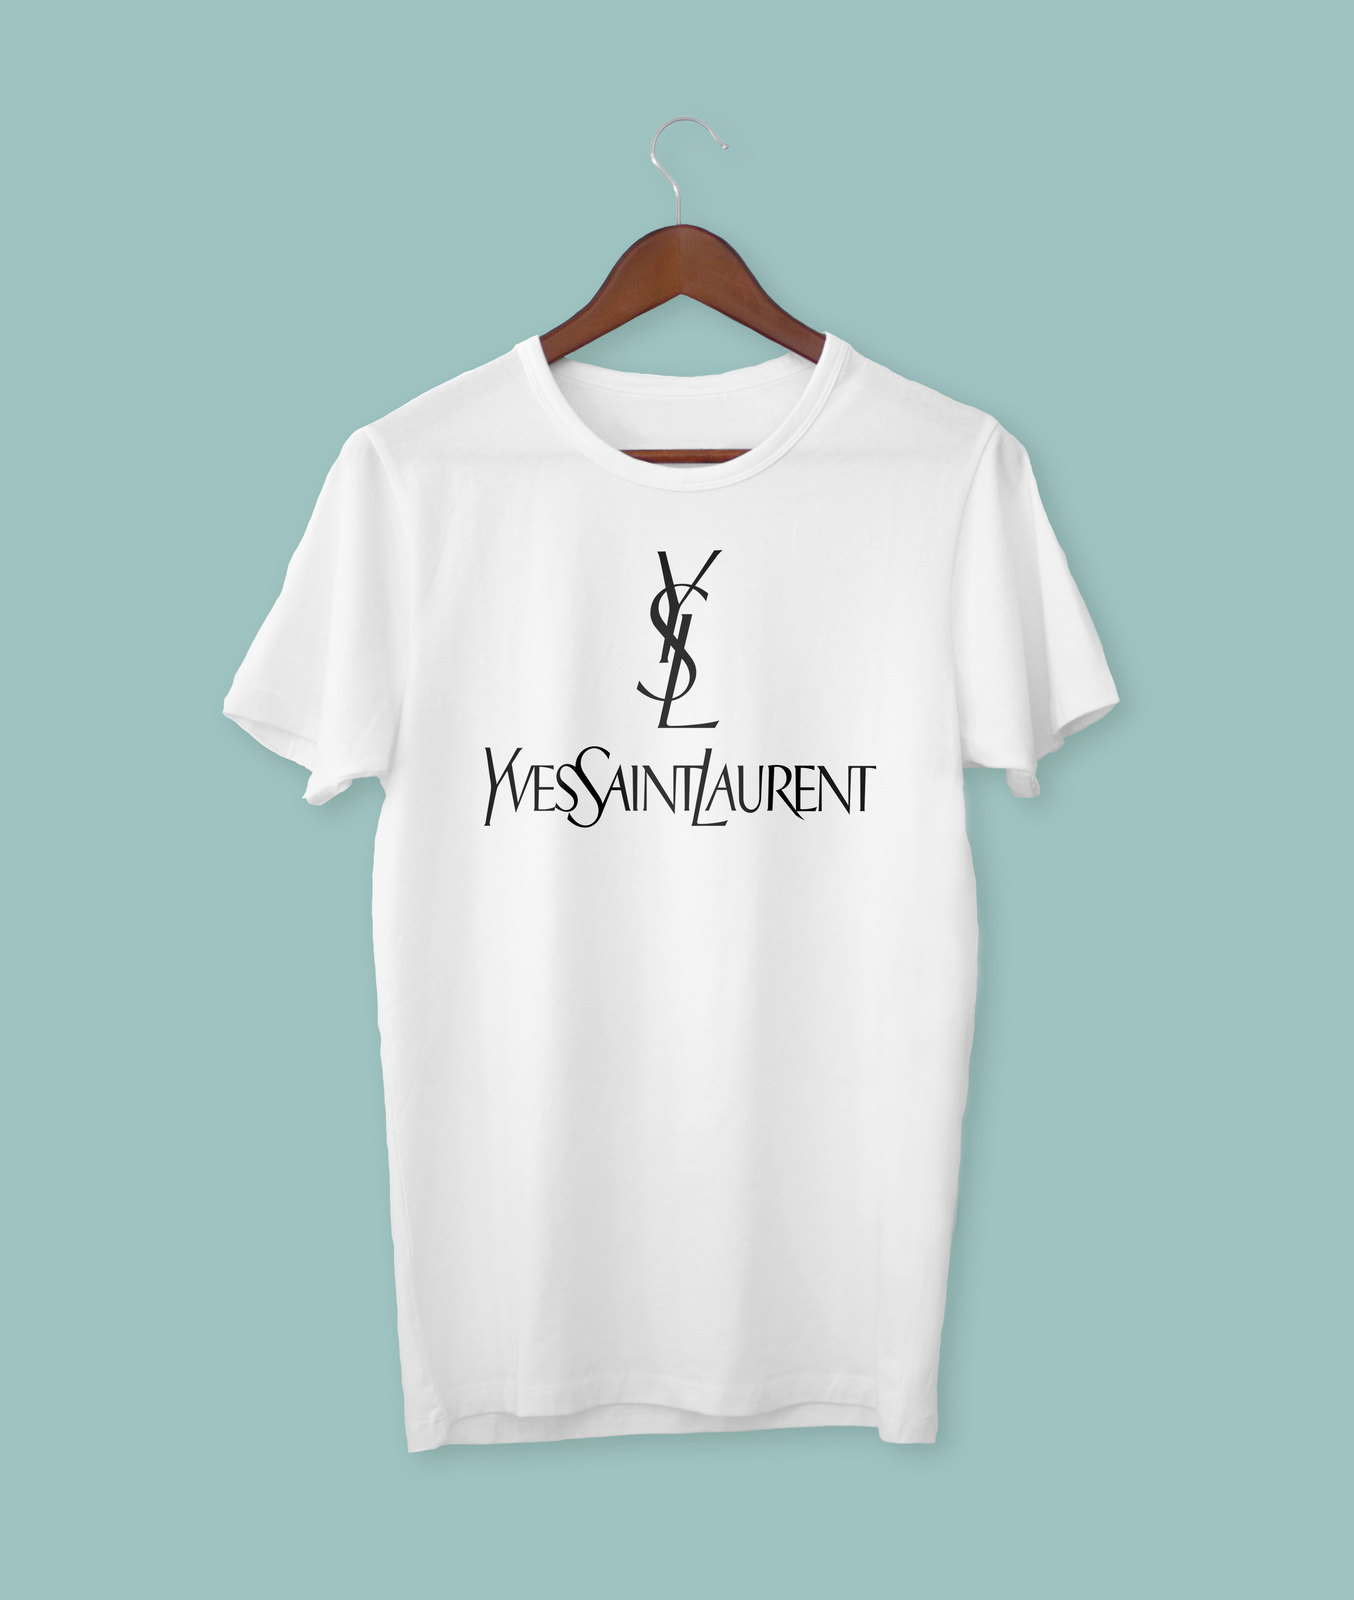 YSL Logo Shirt Band Famous Tee Tshirt Unisex Men Women S-3XL - T-Shirts ...